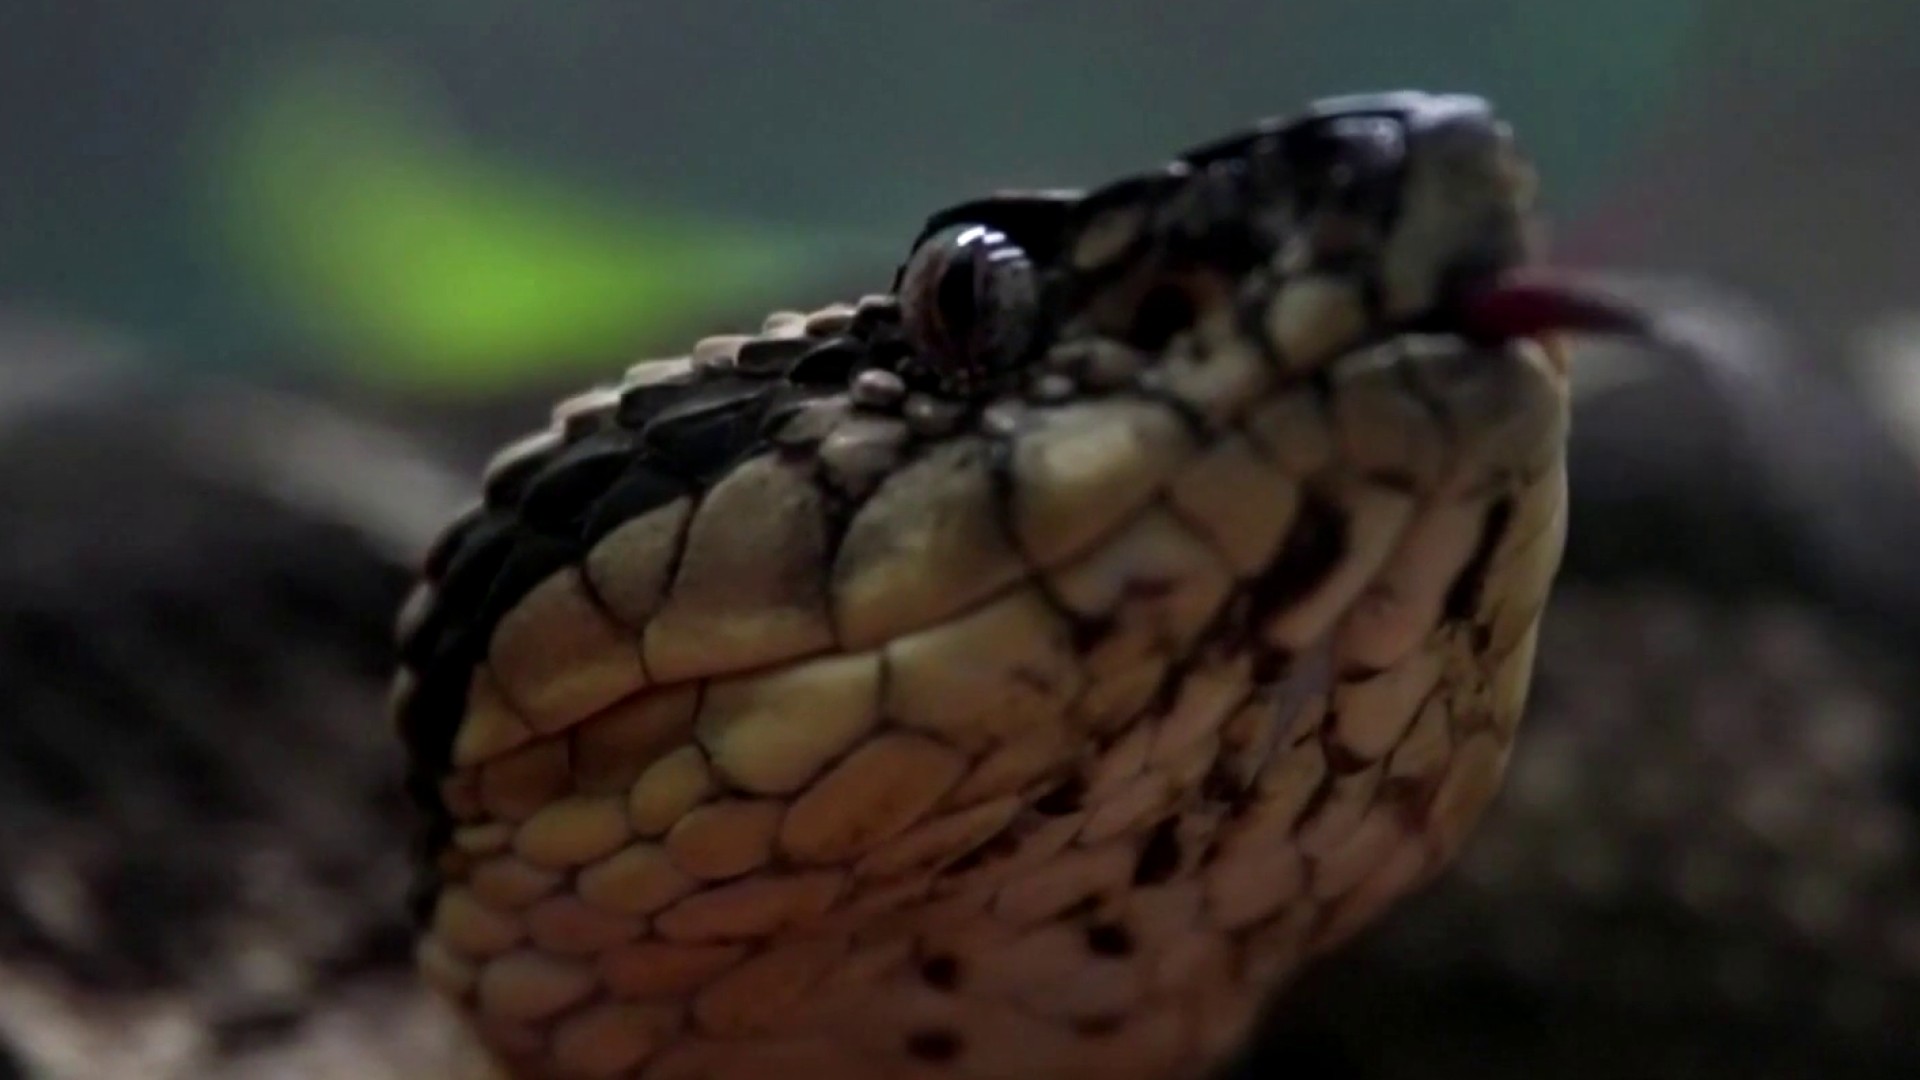 Snake eats gator: More than a viral video